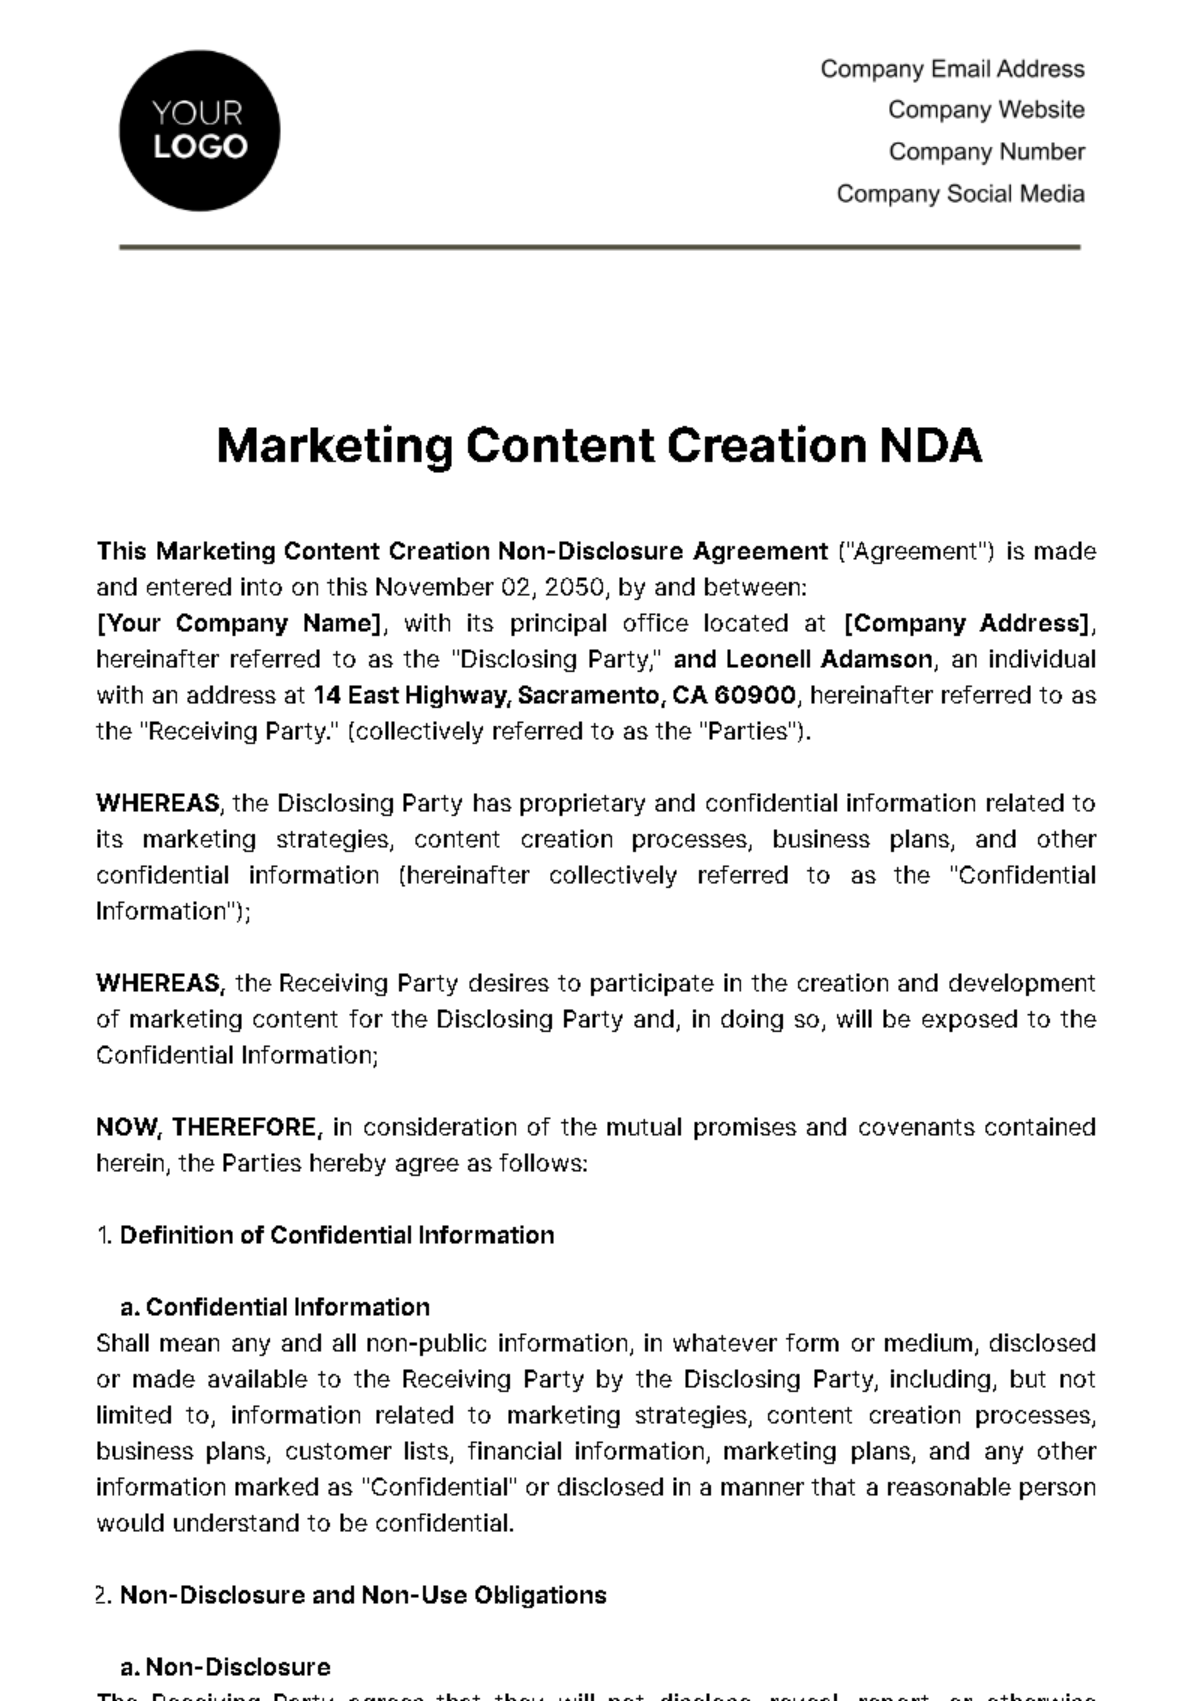 Marketing Content Creation NDA Template